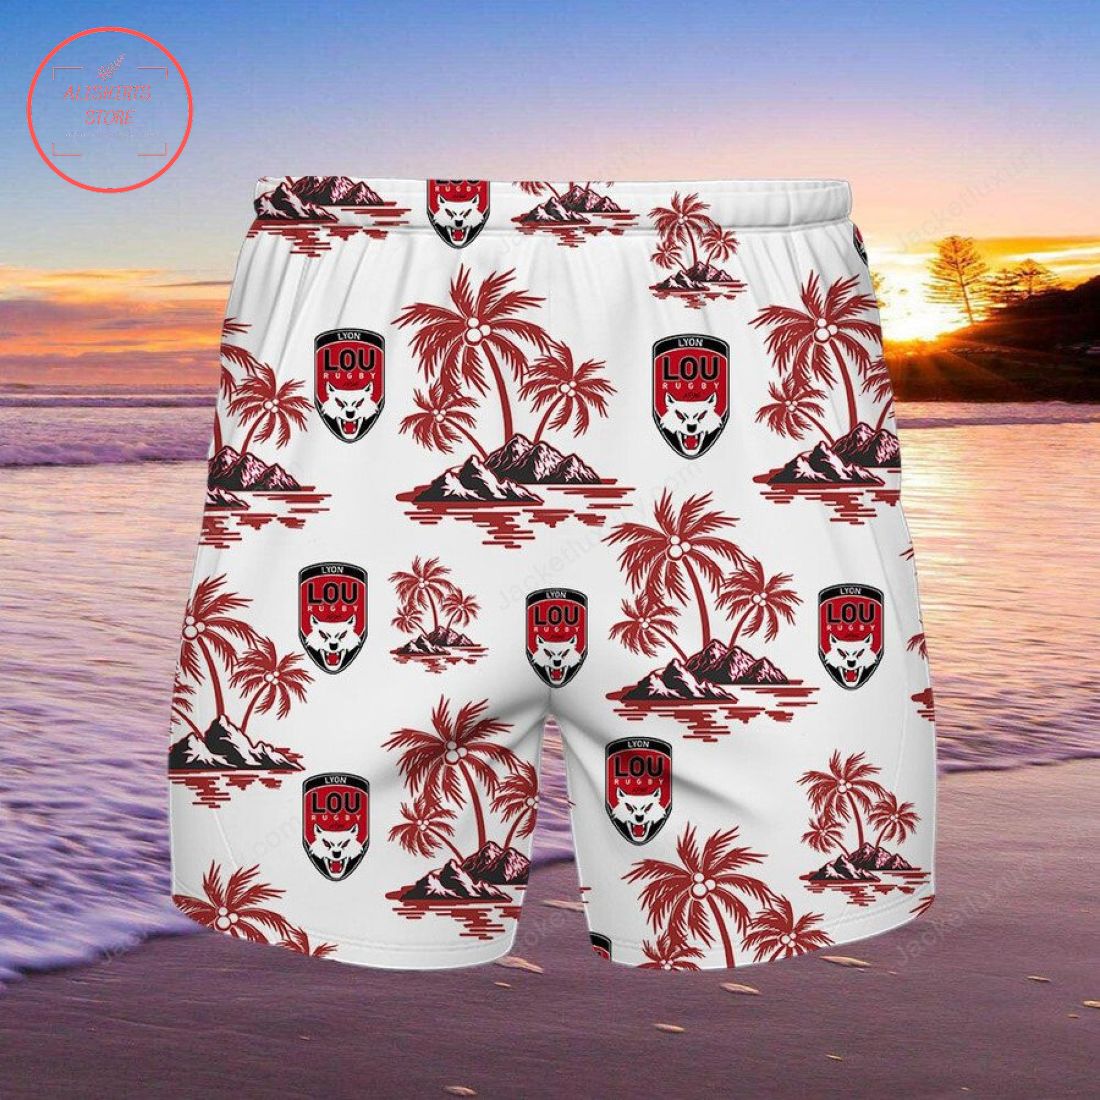 Lyon OU Hawaiian shirts and beach shorts